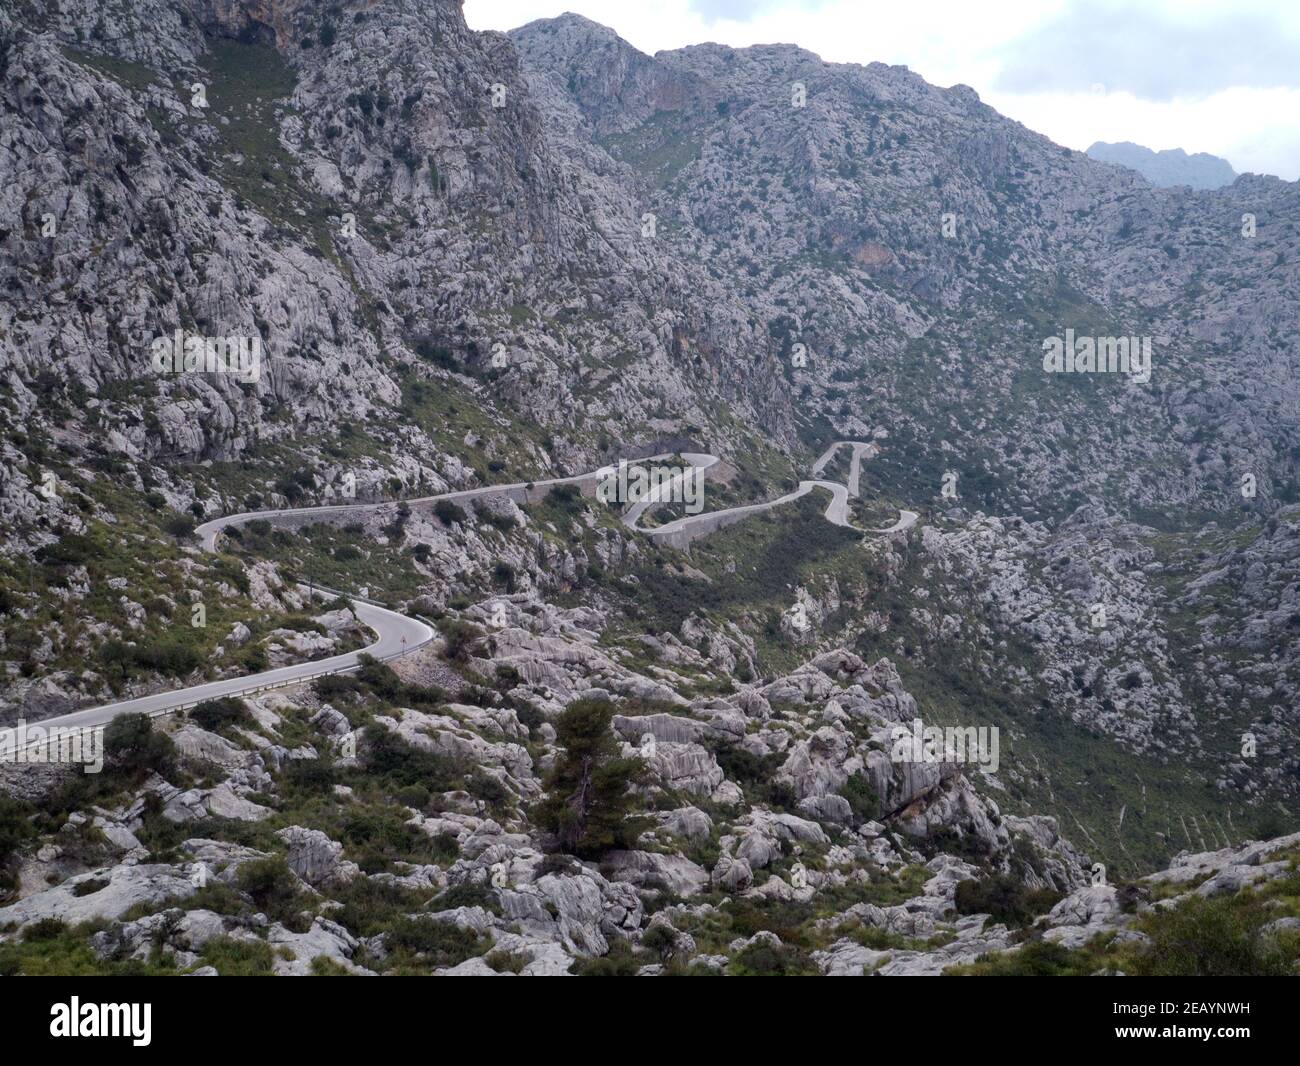 The sinuous curves of the spectacular Sa Calobra road climb in the Serra de Tramuntana mountain range, Mallorca, Spain Stock Photo